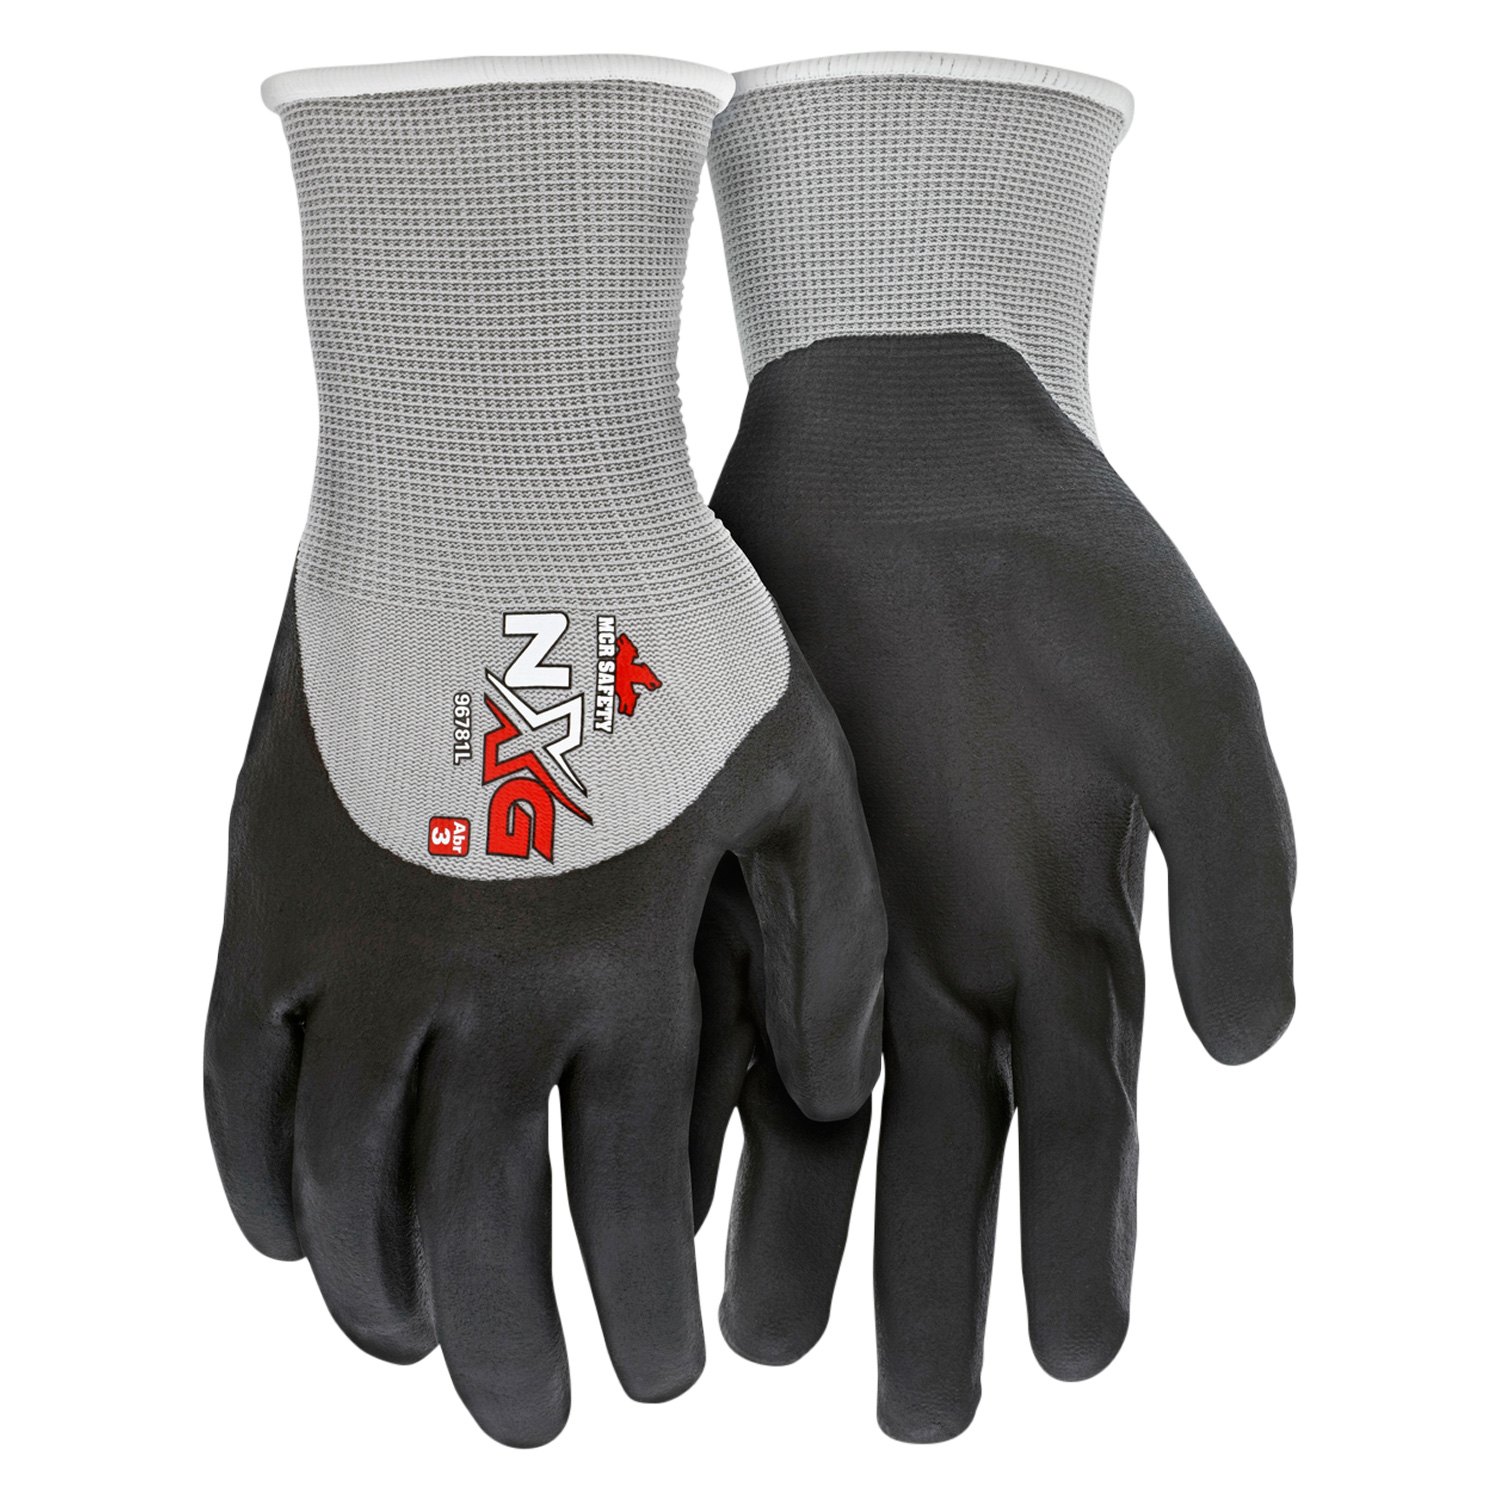 # N96797 Memphis Ninja BNF Breathable Nitrile Foam Multi-purpose work gloves